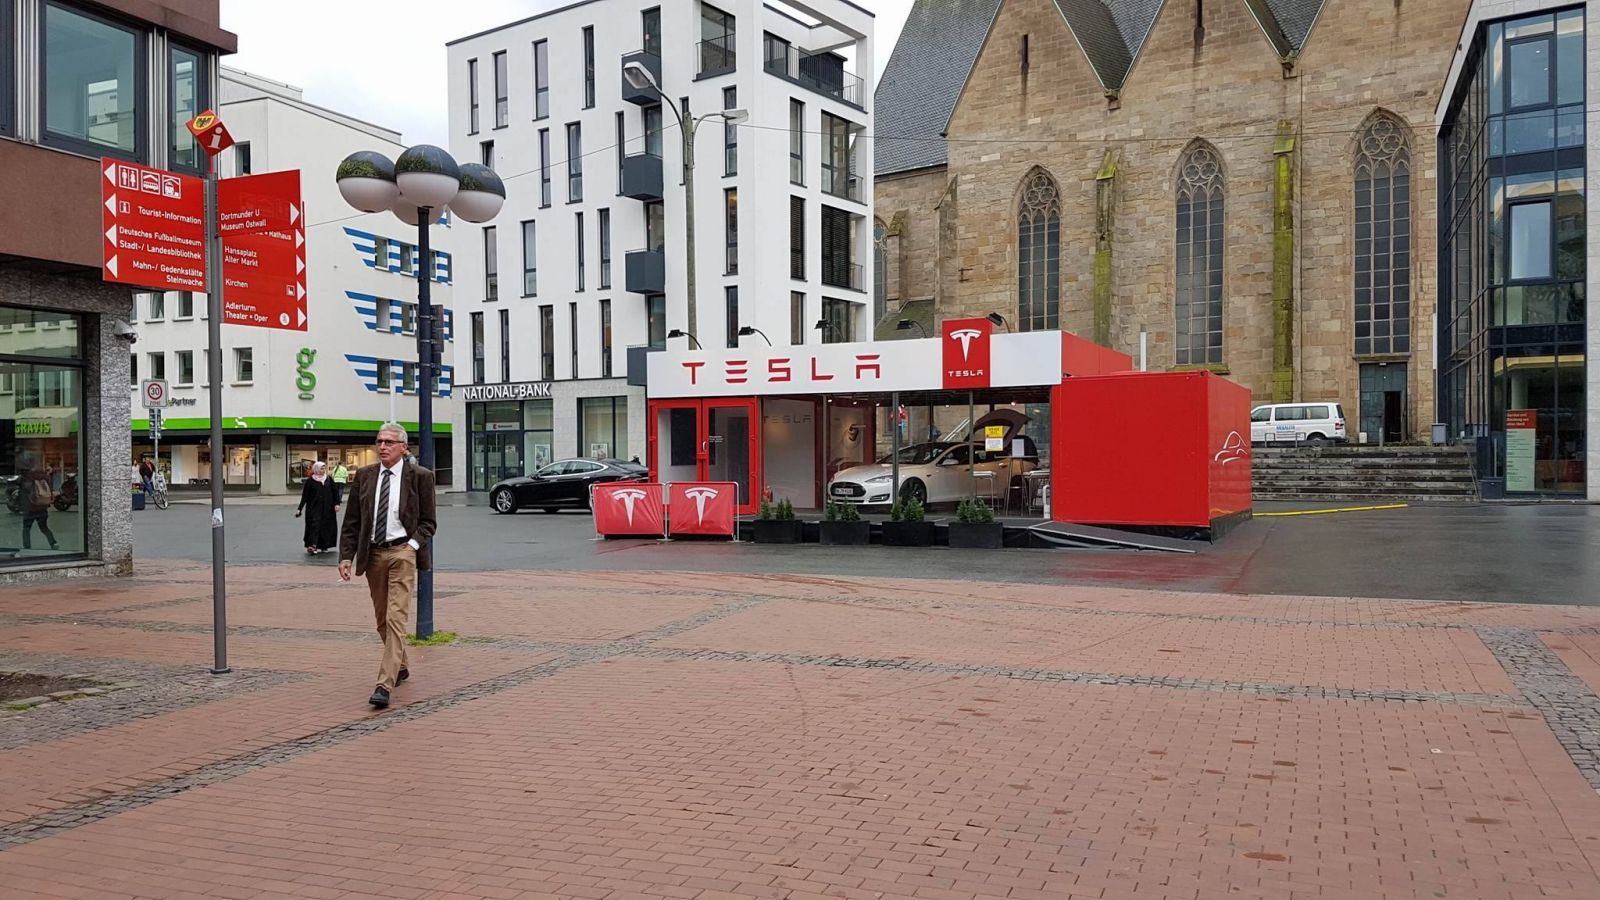 Tesla Pop Up Store in Dortmund